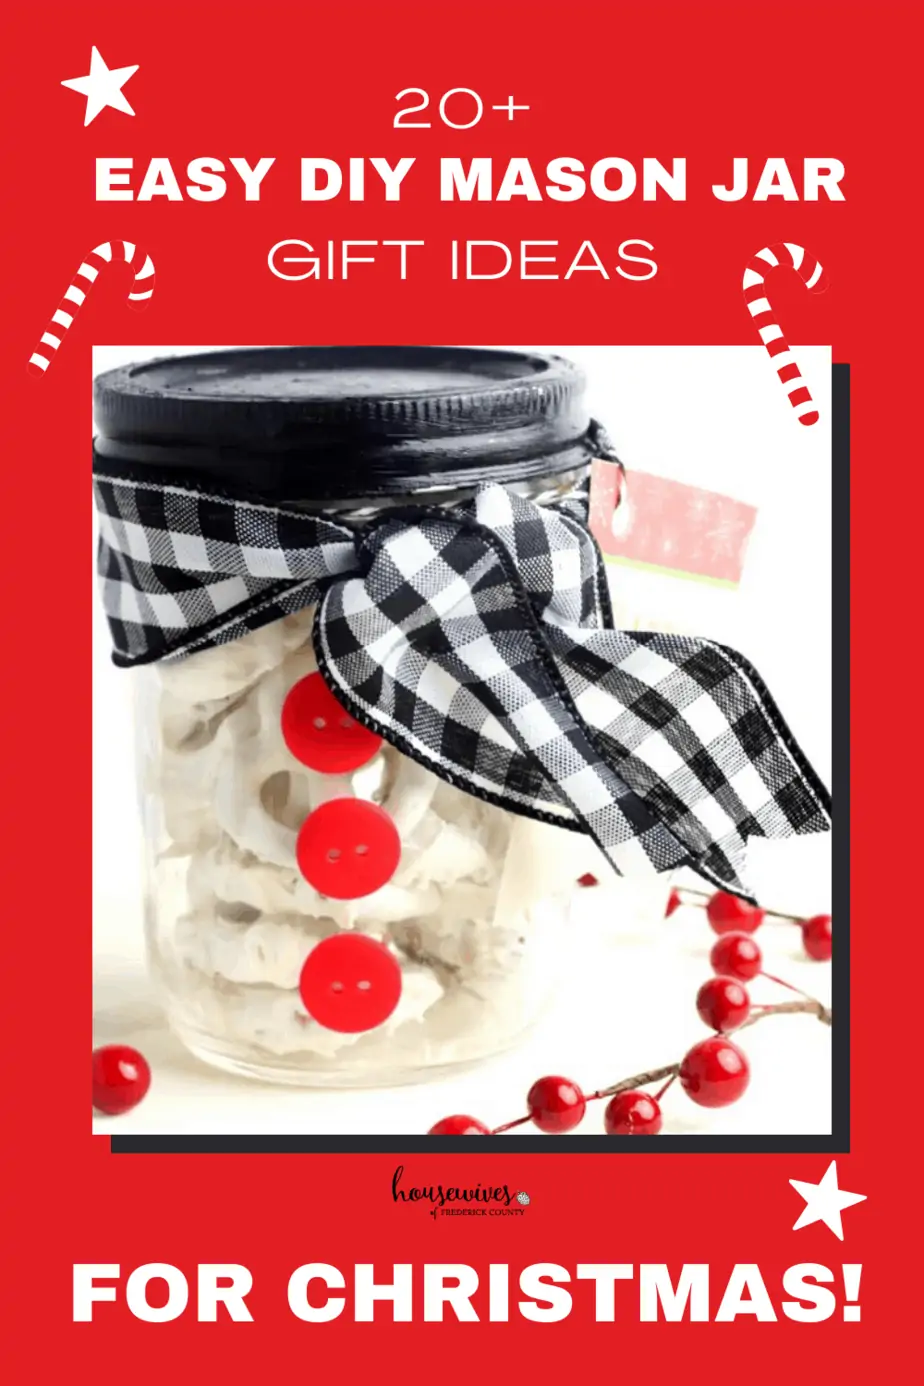 Easy DIY Holiday Mason Jar Decoration {Tutorial} - The Chic Life